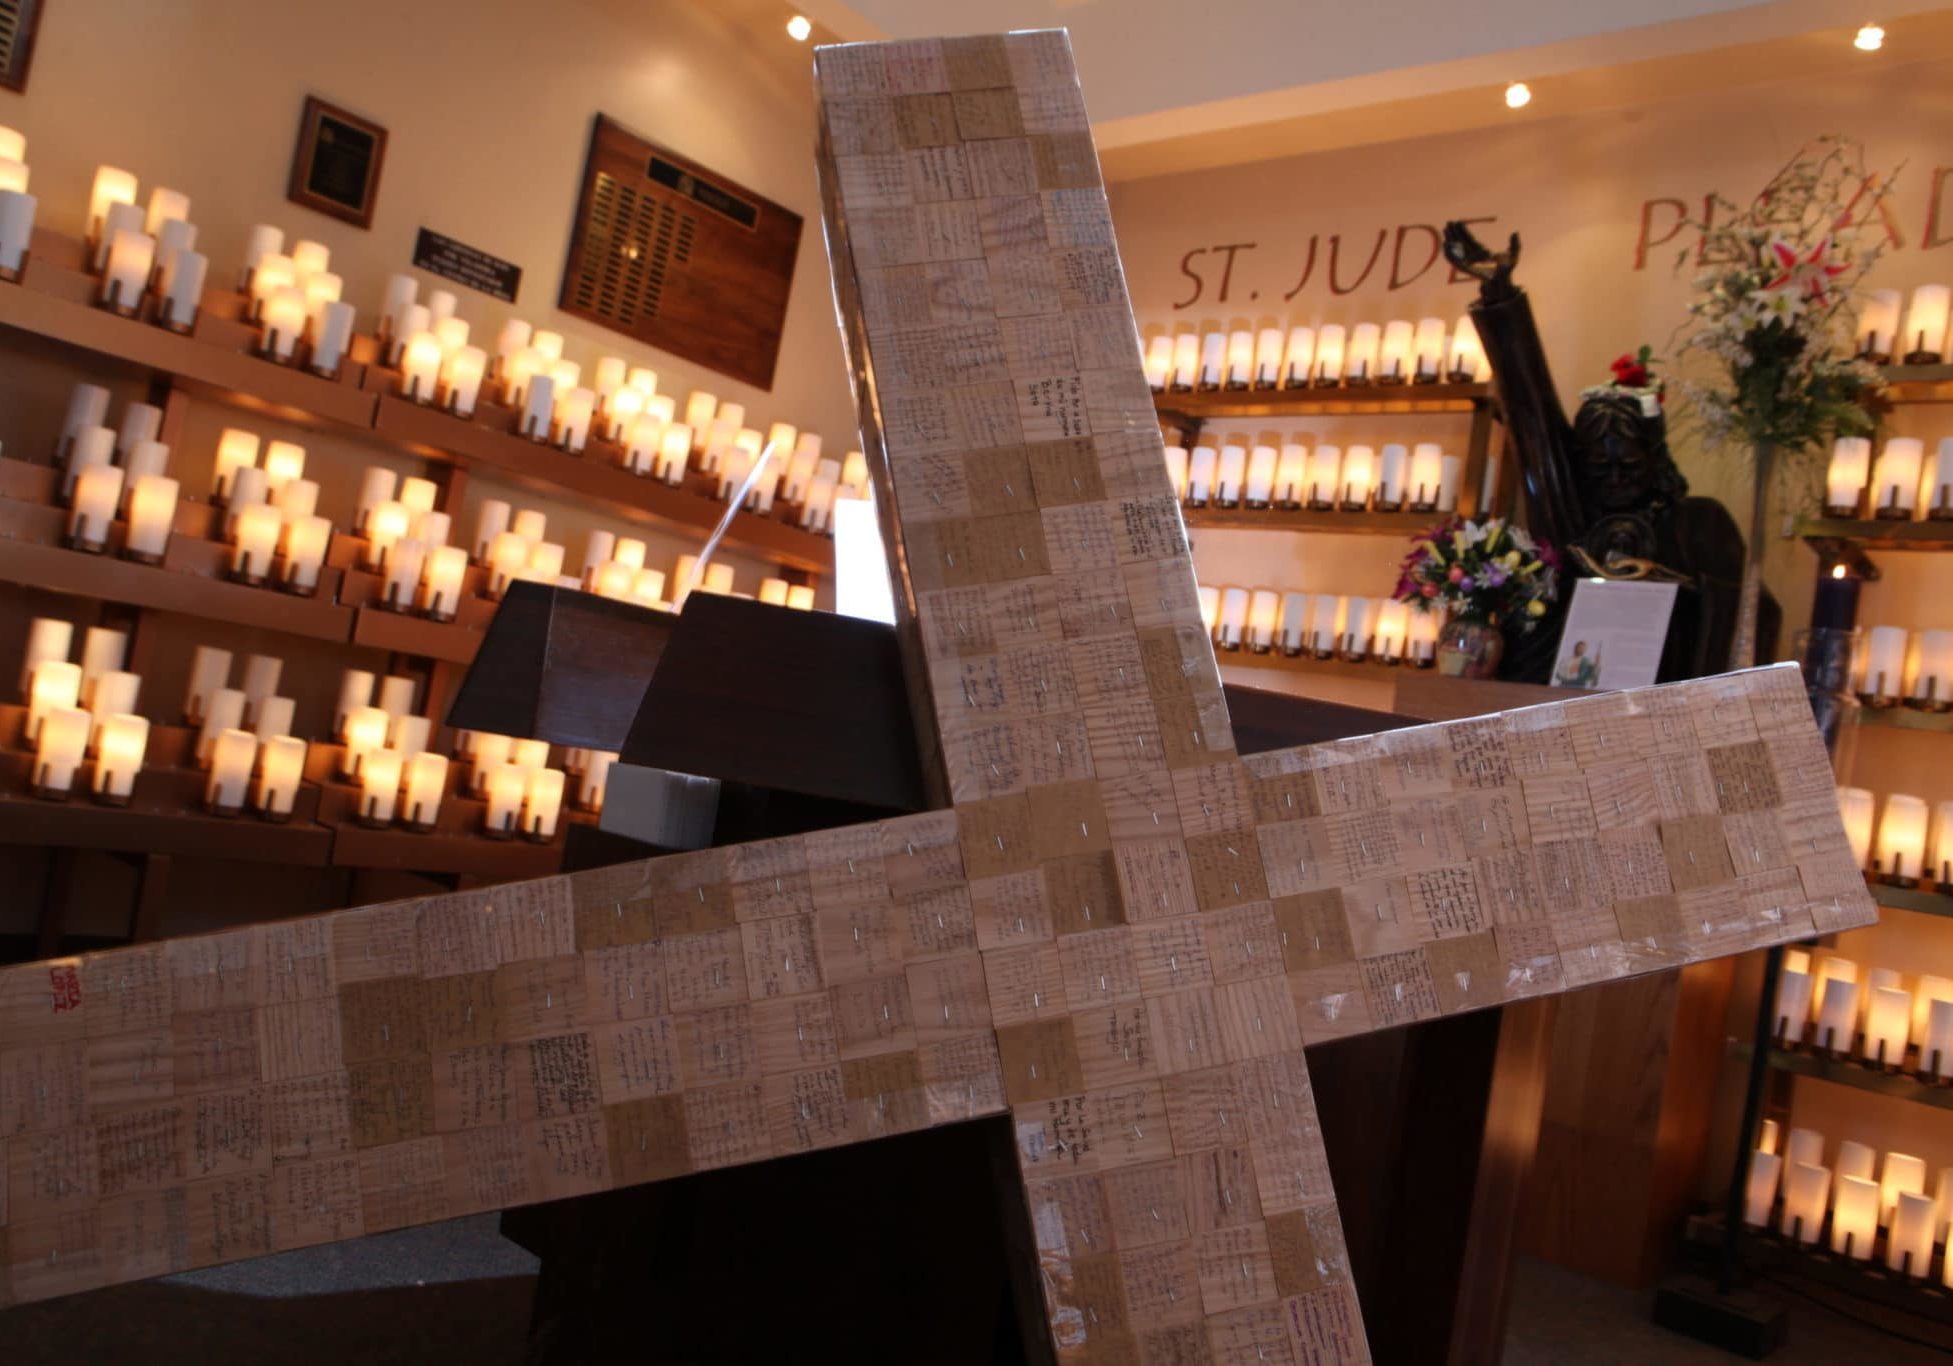 The Holy Week Prayer cross displayed during Easter Holy Week